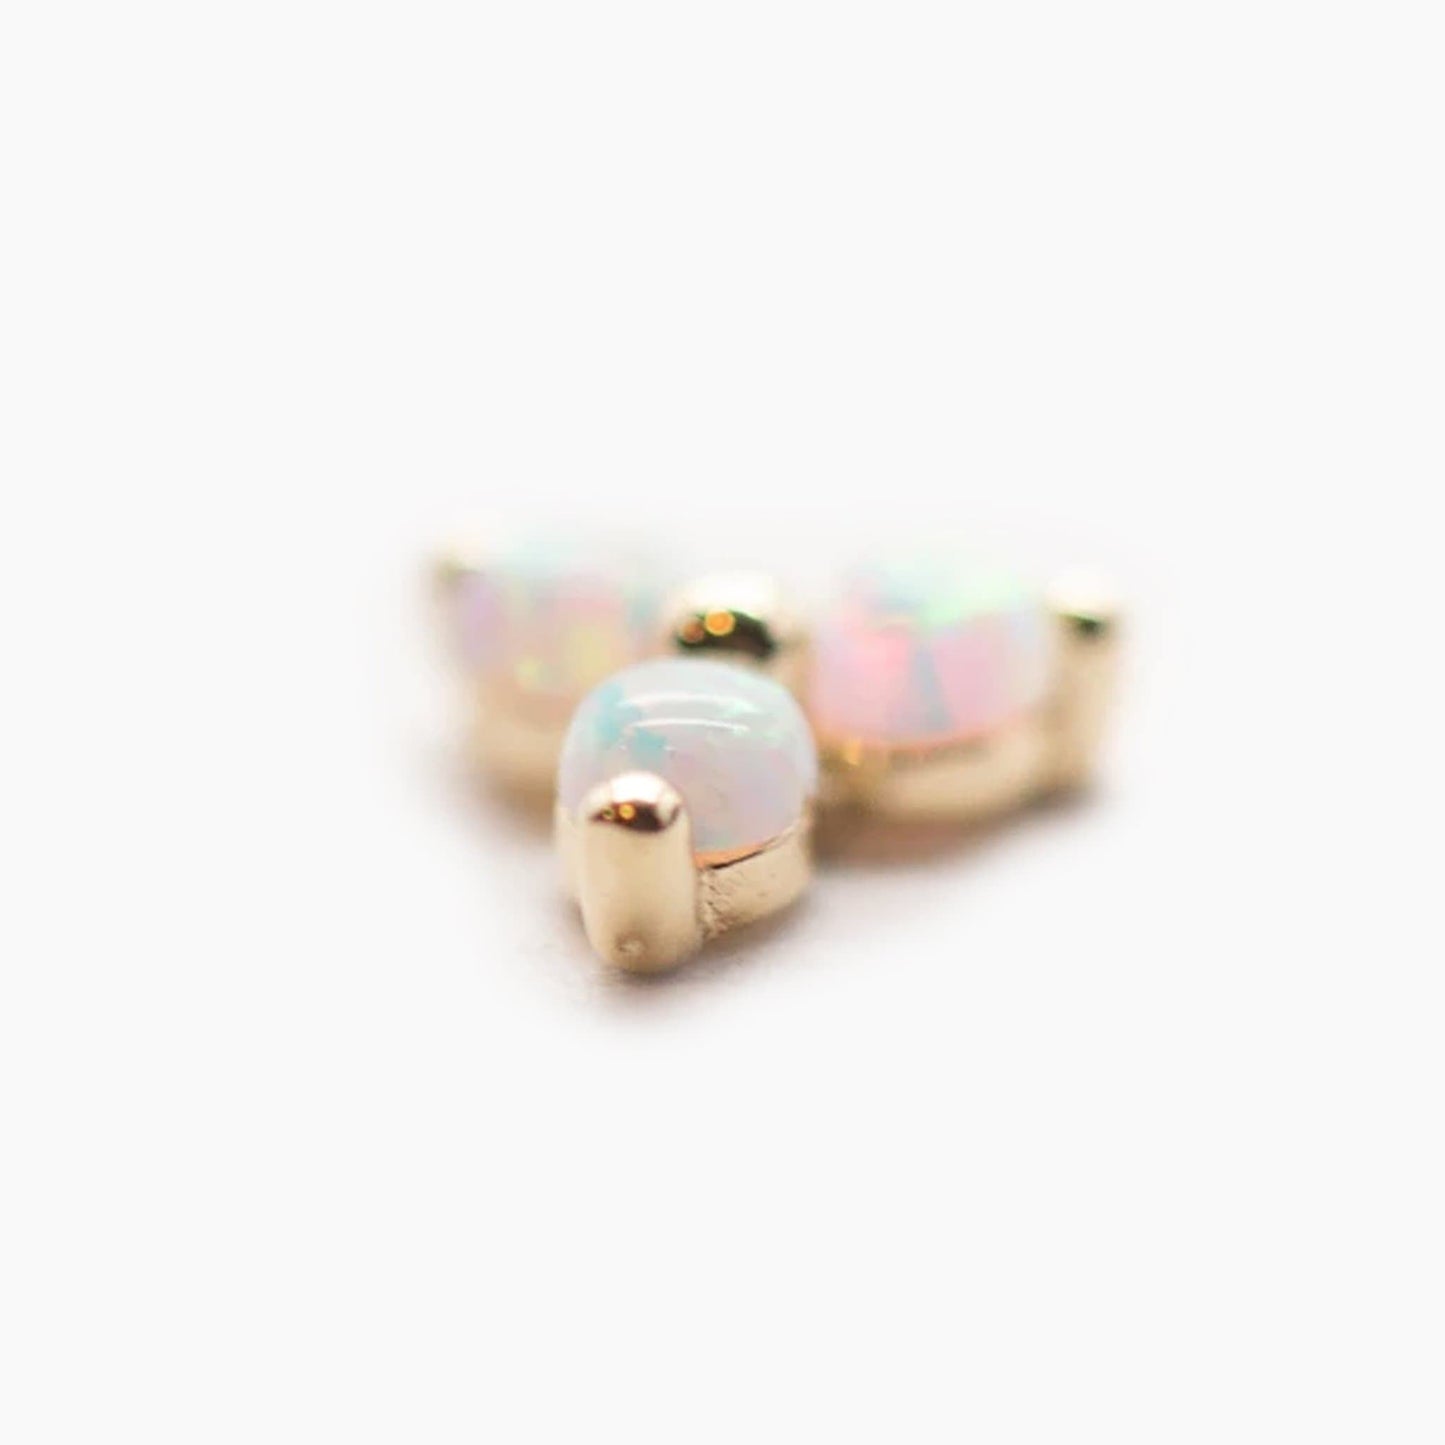 Large Opal Trinity | 14K Threadless Top For Nose, Ears & Lip - Avanti Body Jewelry